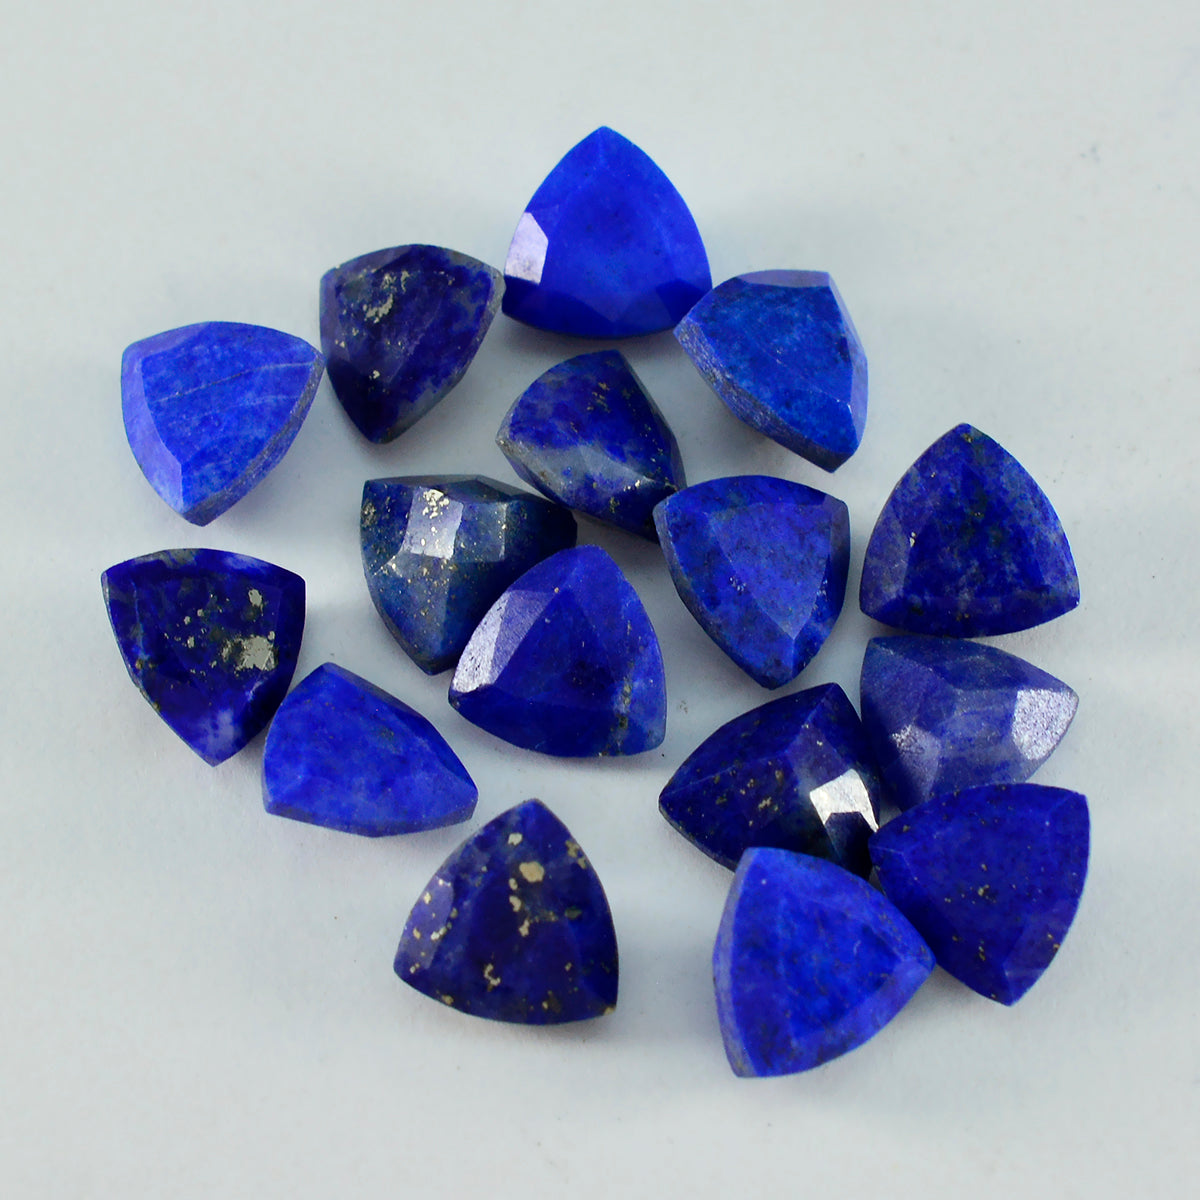 Riyogems 1PC Echte Blauwe Lapis Lazuli Facet 6x6 mm Biljoen Vorm geweldige Kwaliteit Losse Edelsteen